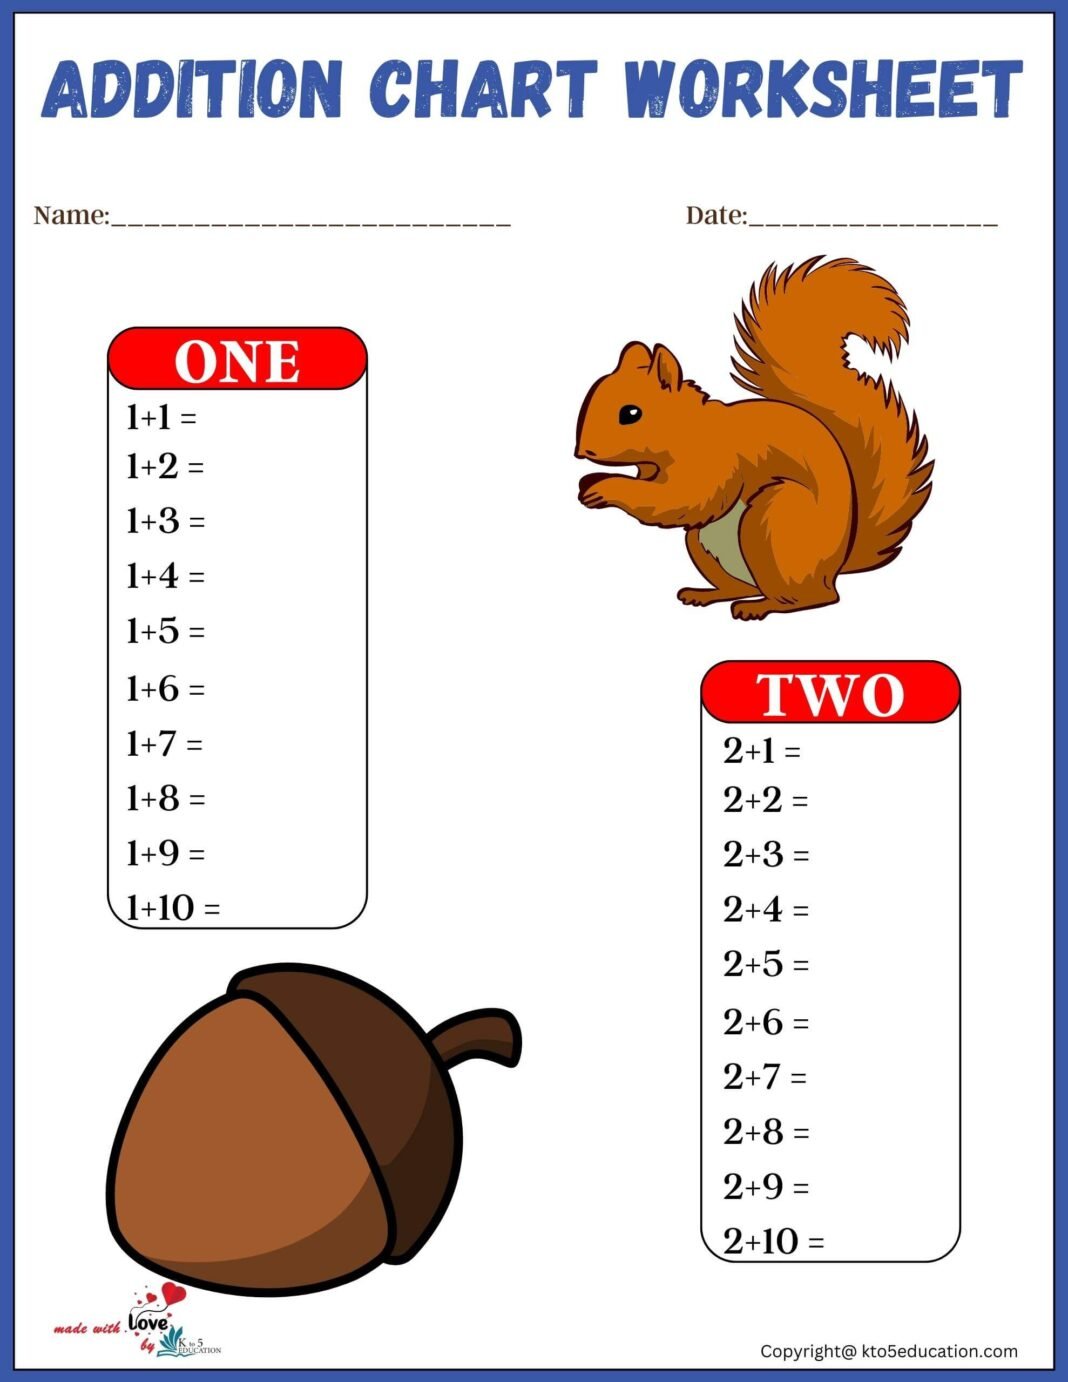 Kindergarten Addition Chart Worksheet FREE Download